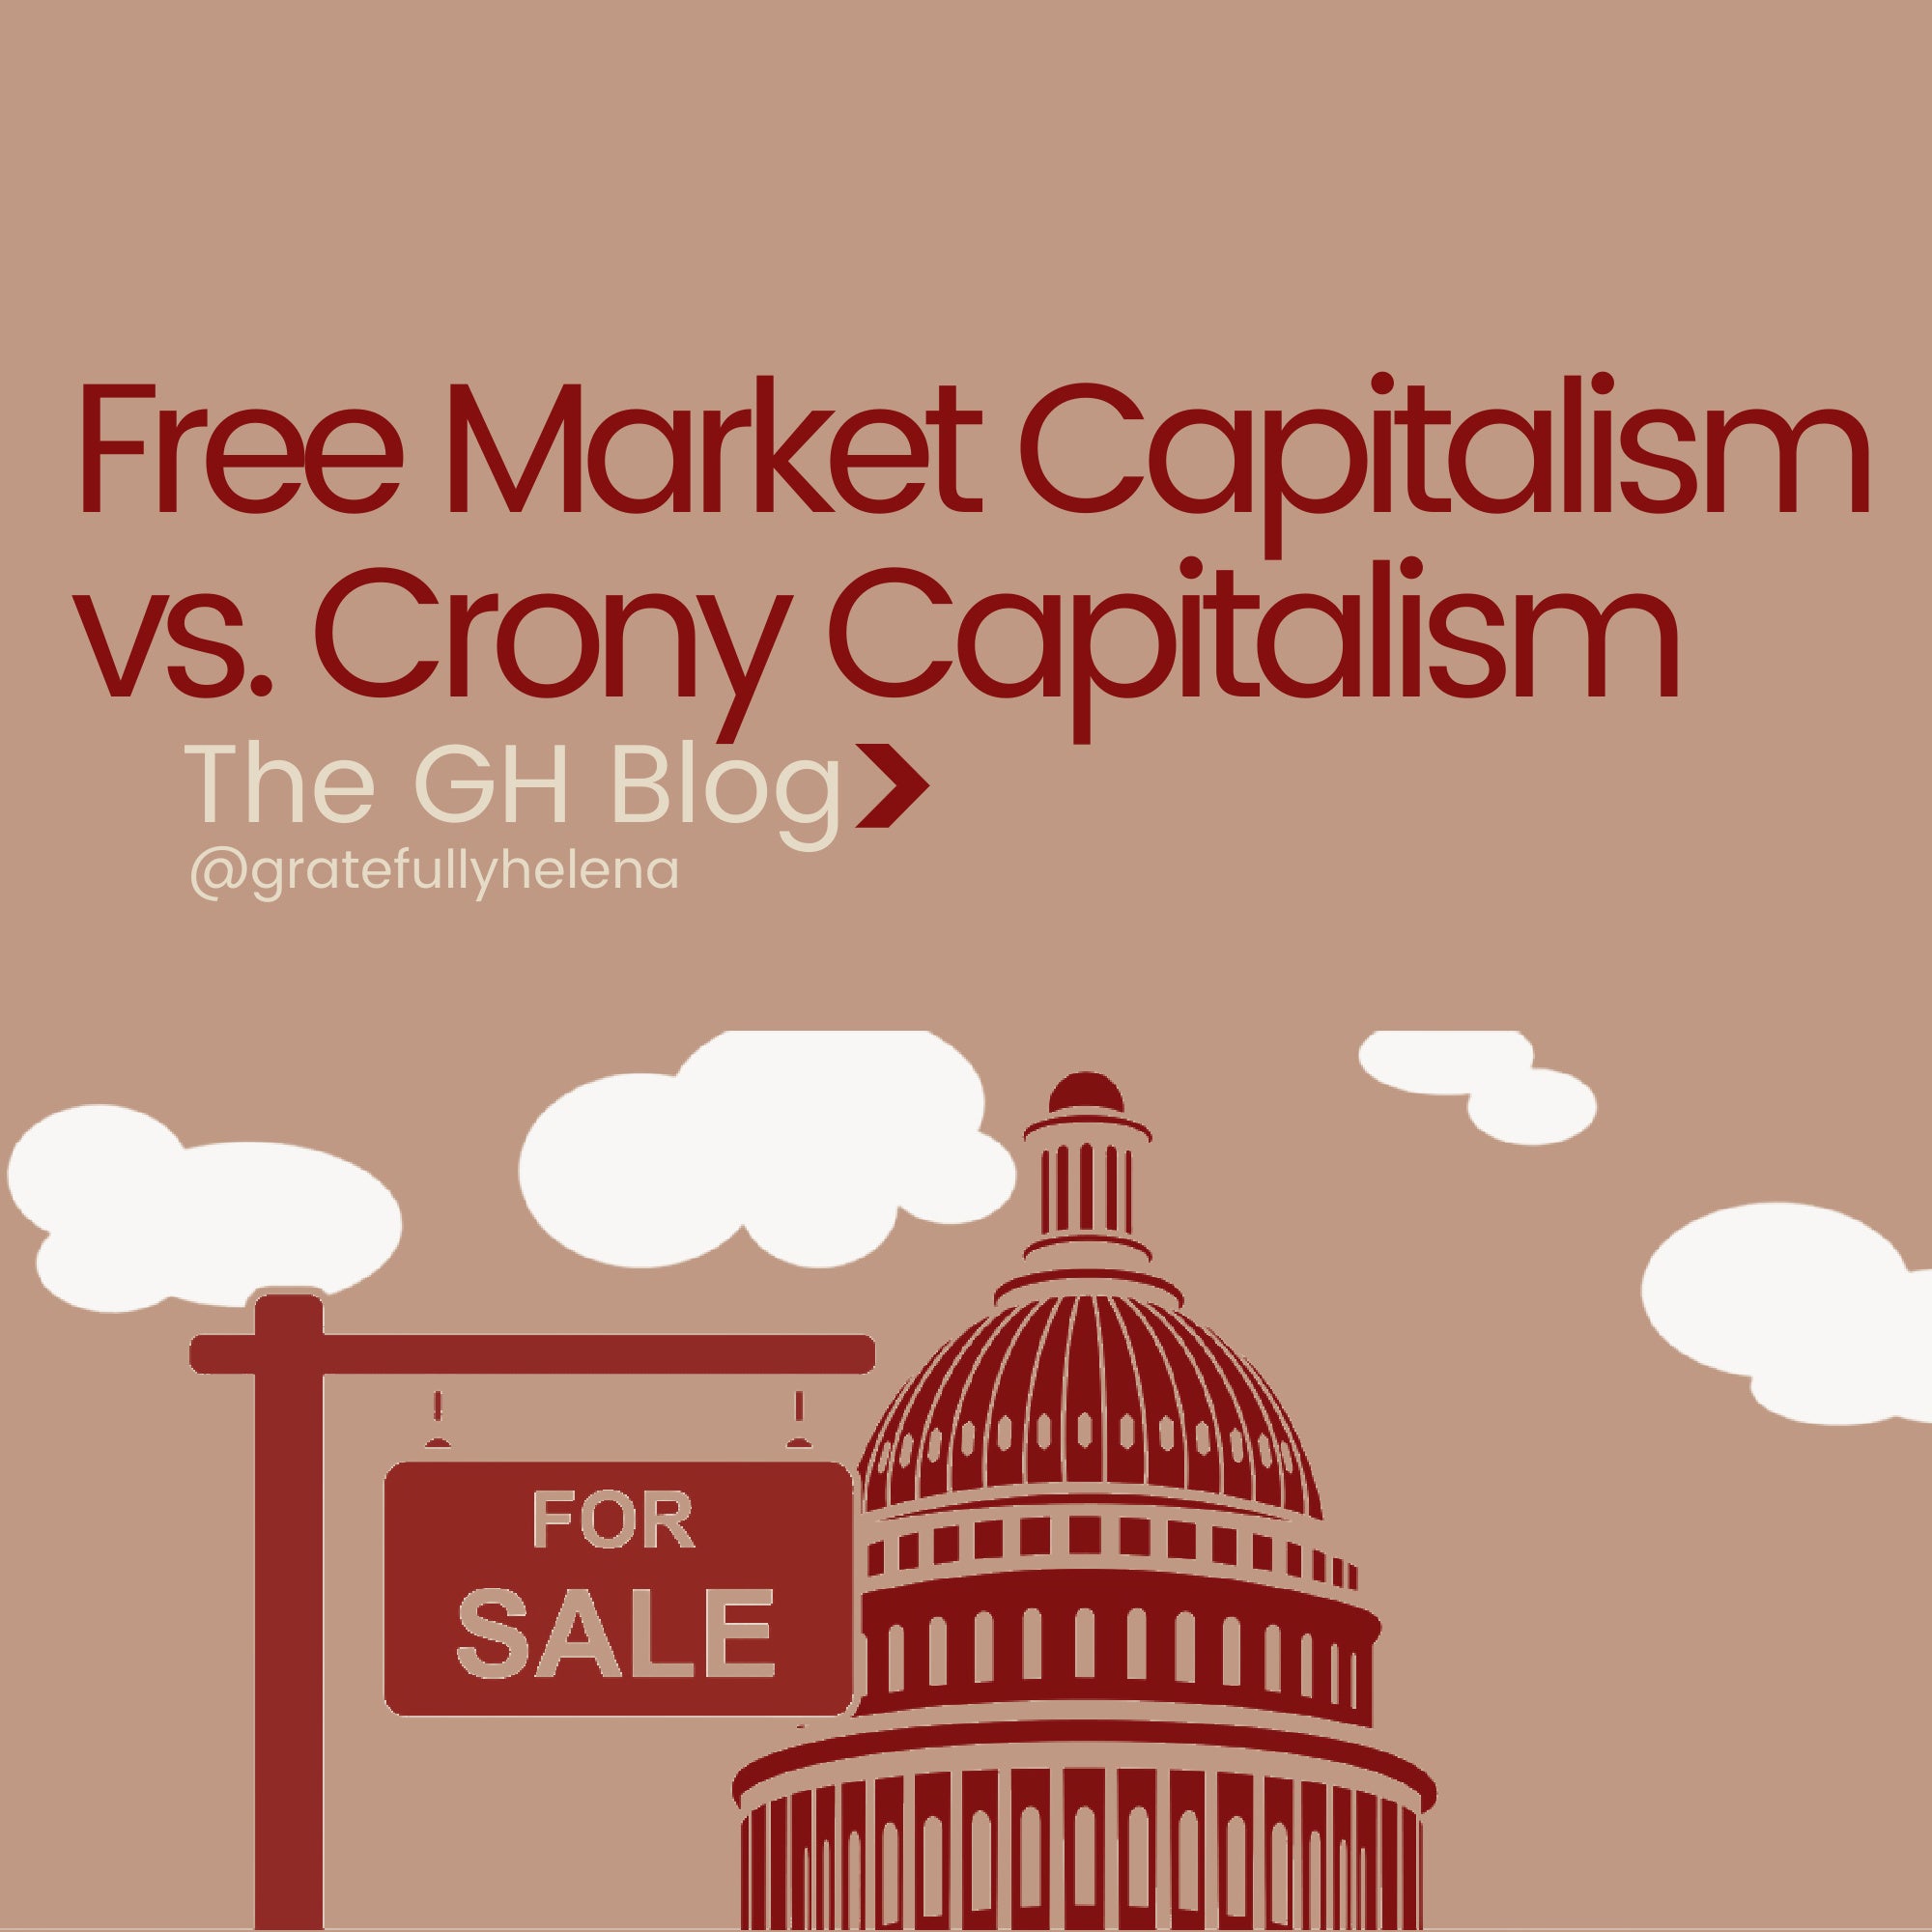 Free Market Capitalism vs. Crony Capitalism